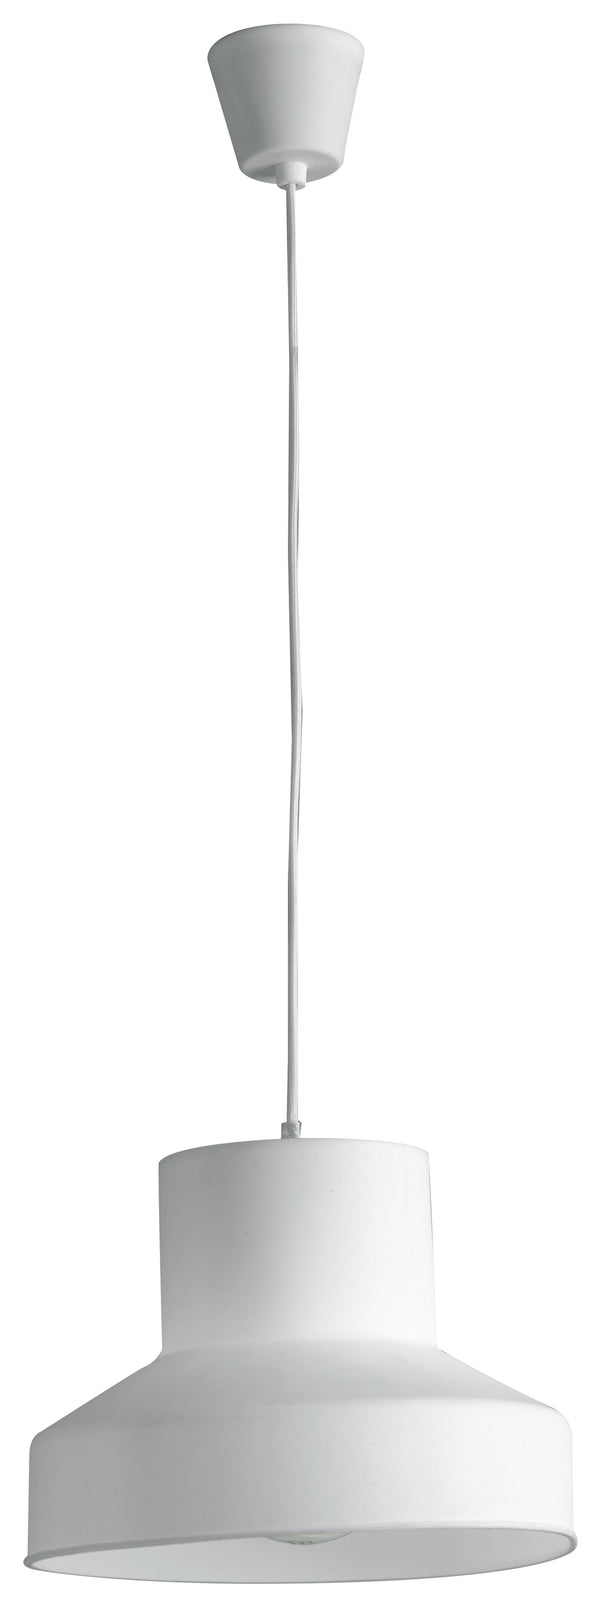 sconto Aufhängung Moderner Kronleuchter aus weißem Silikon E27 Environment I-LENNON/S1